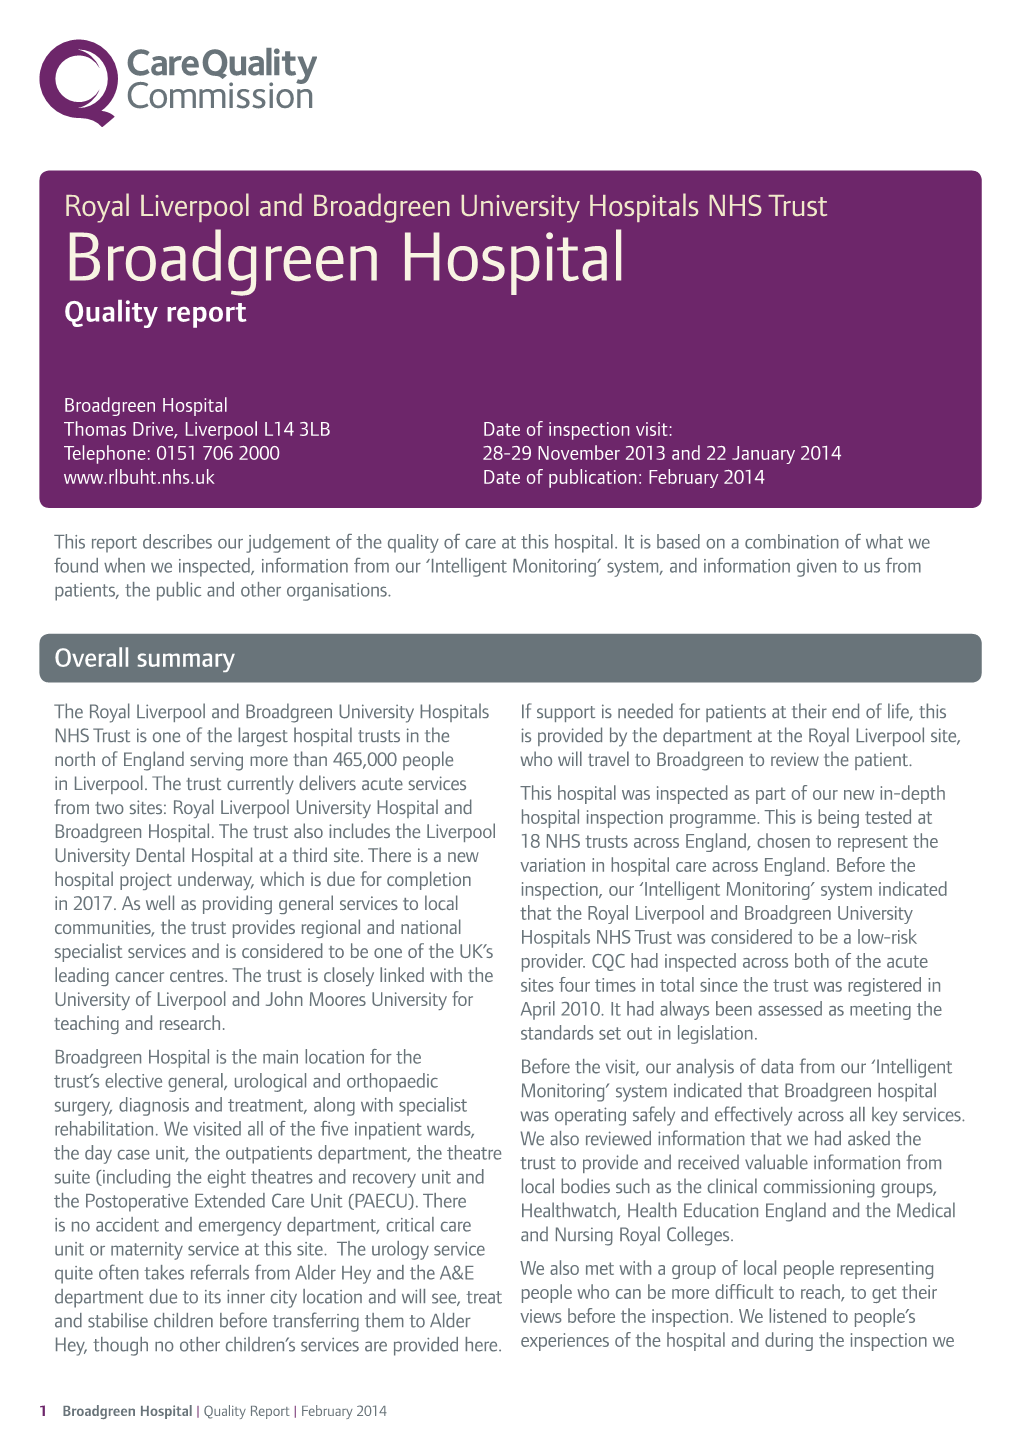 Broadgreen Hospital Quality Report